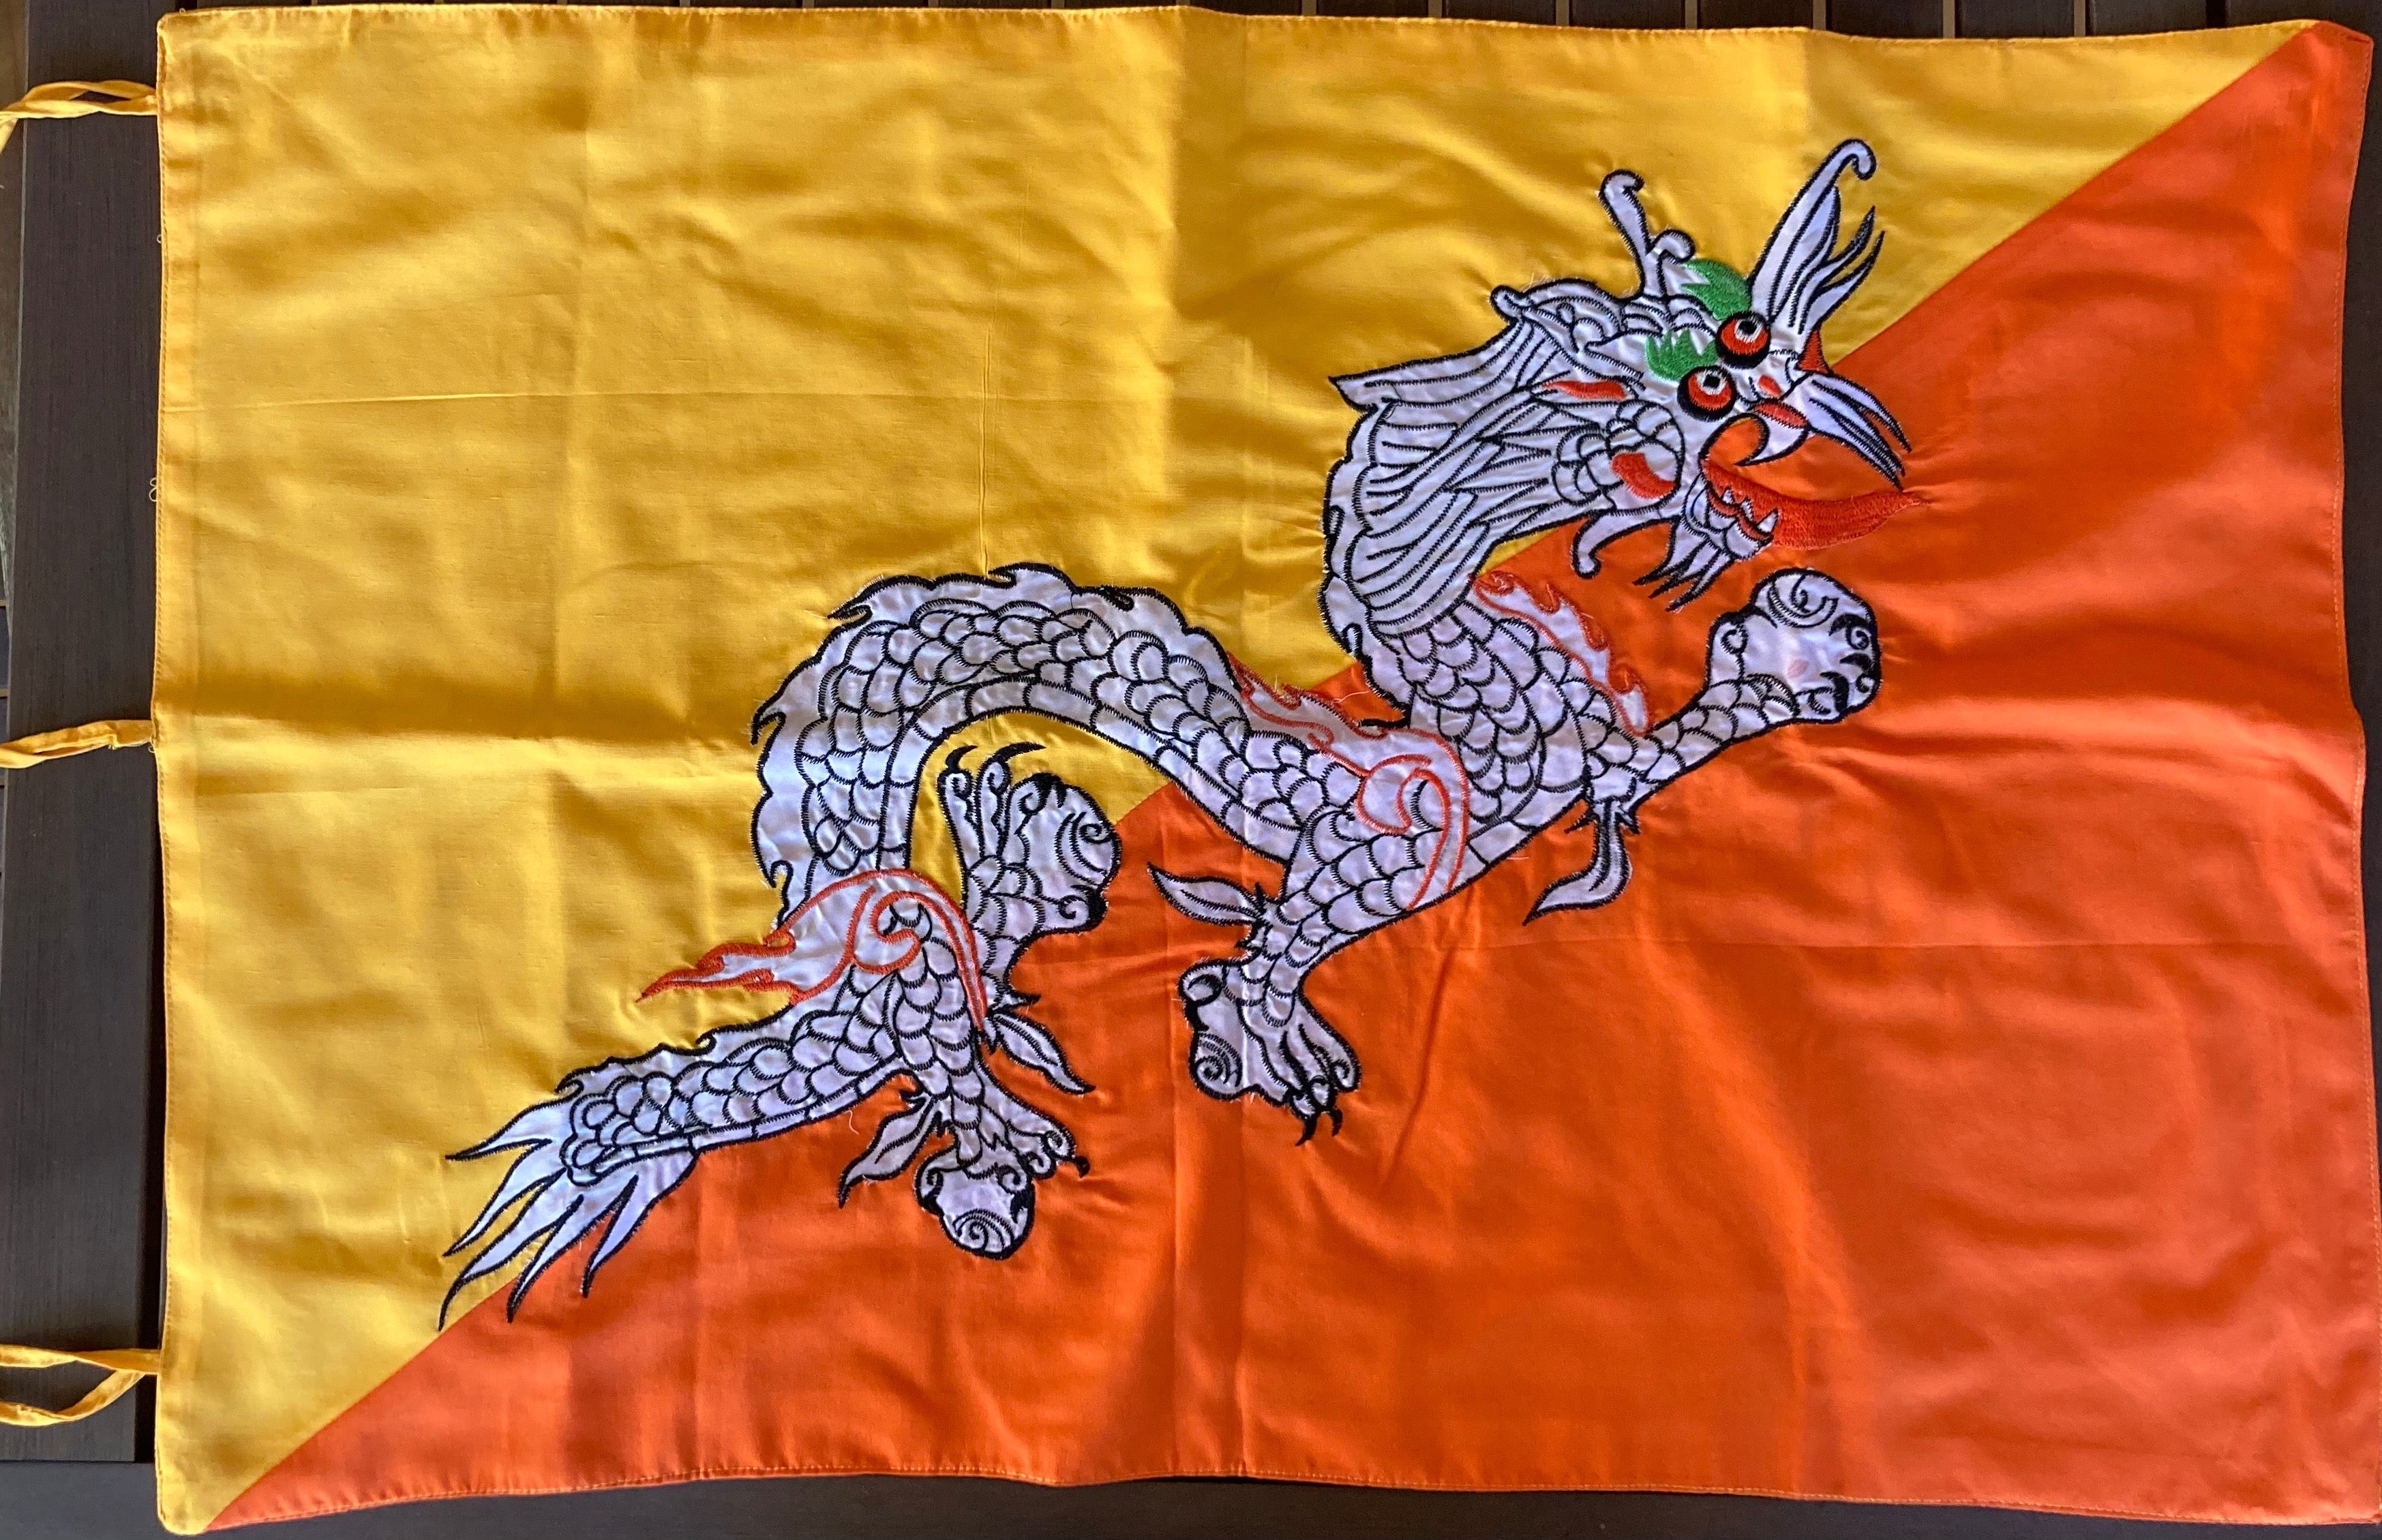 The National Flag of Bhutan - handmade with embroidered dragon